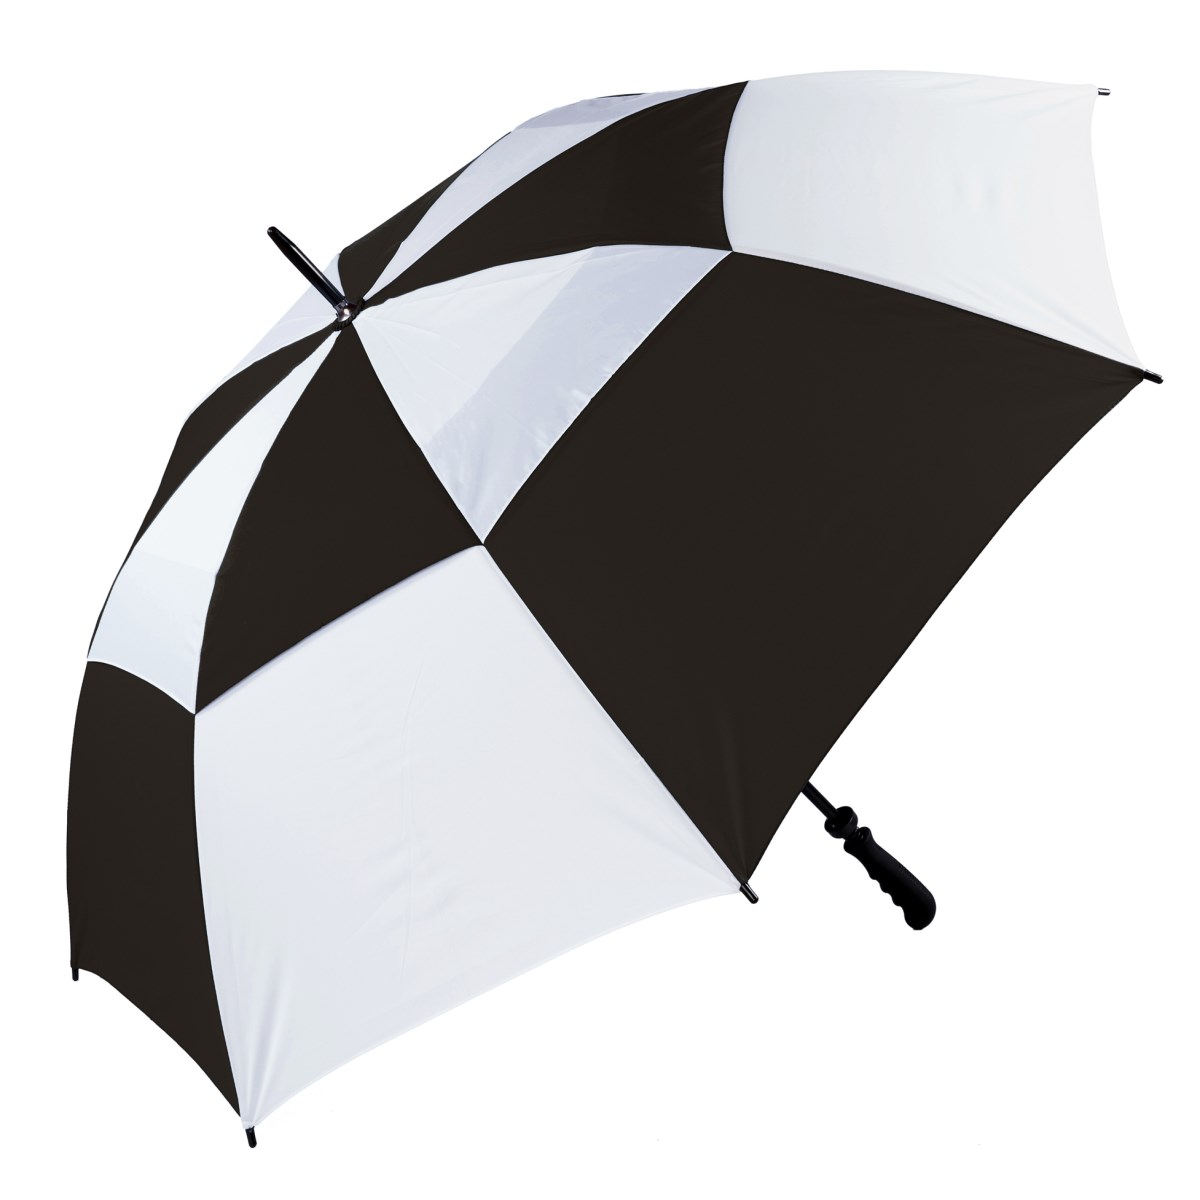 Wind-Resistant Golf Umbrella - Black & White - The Gibraltar(3475)